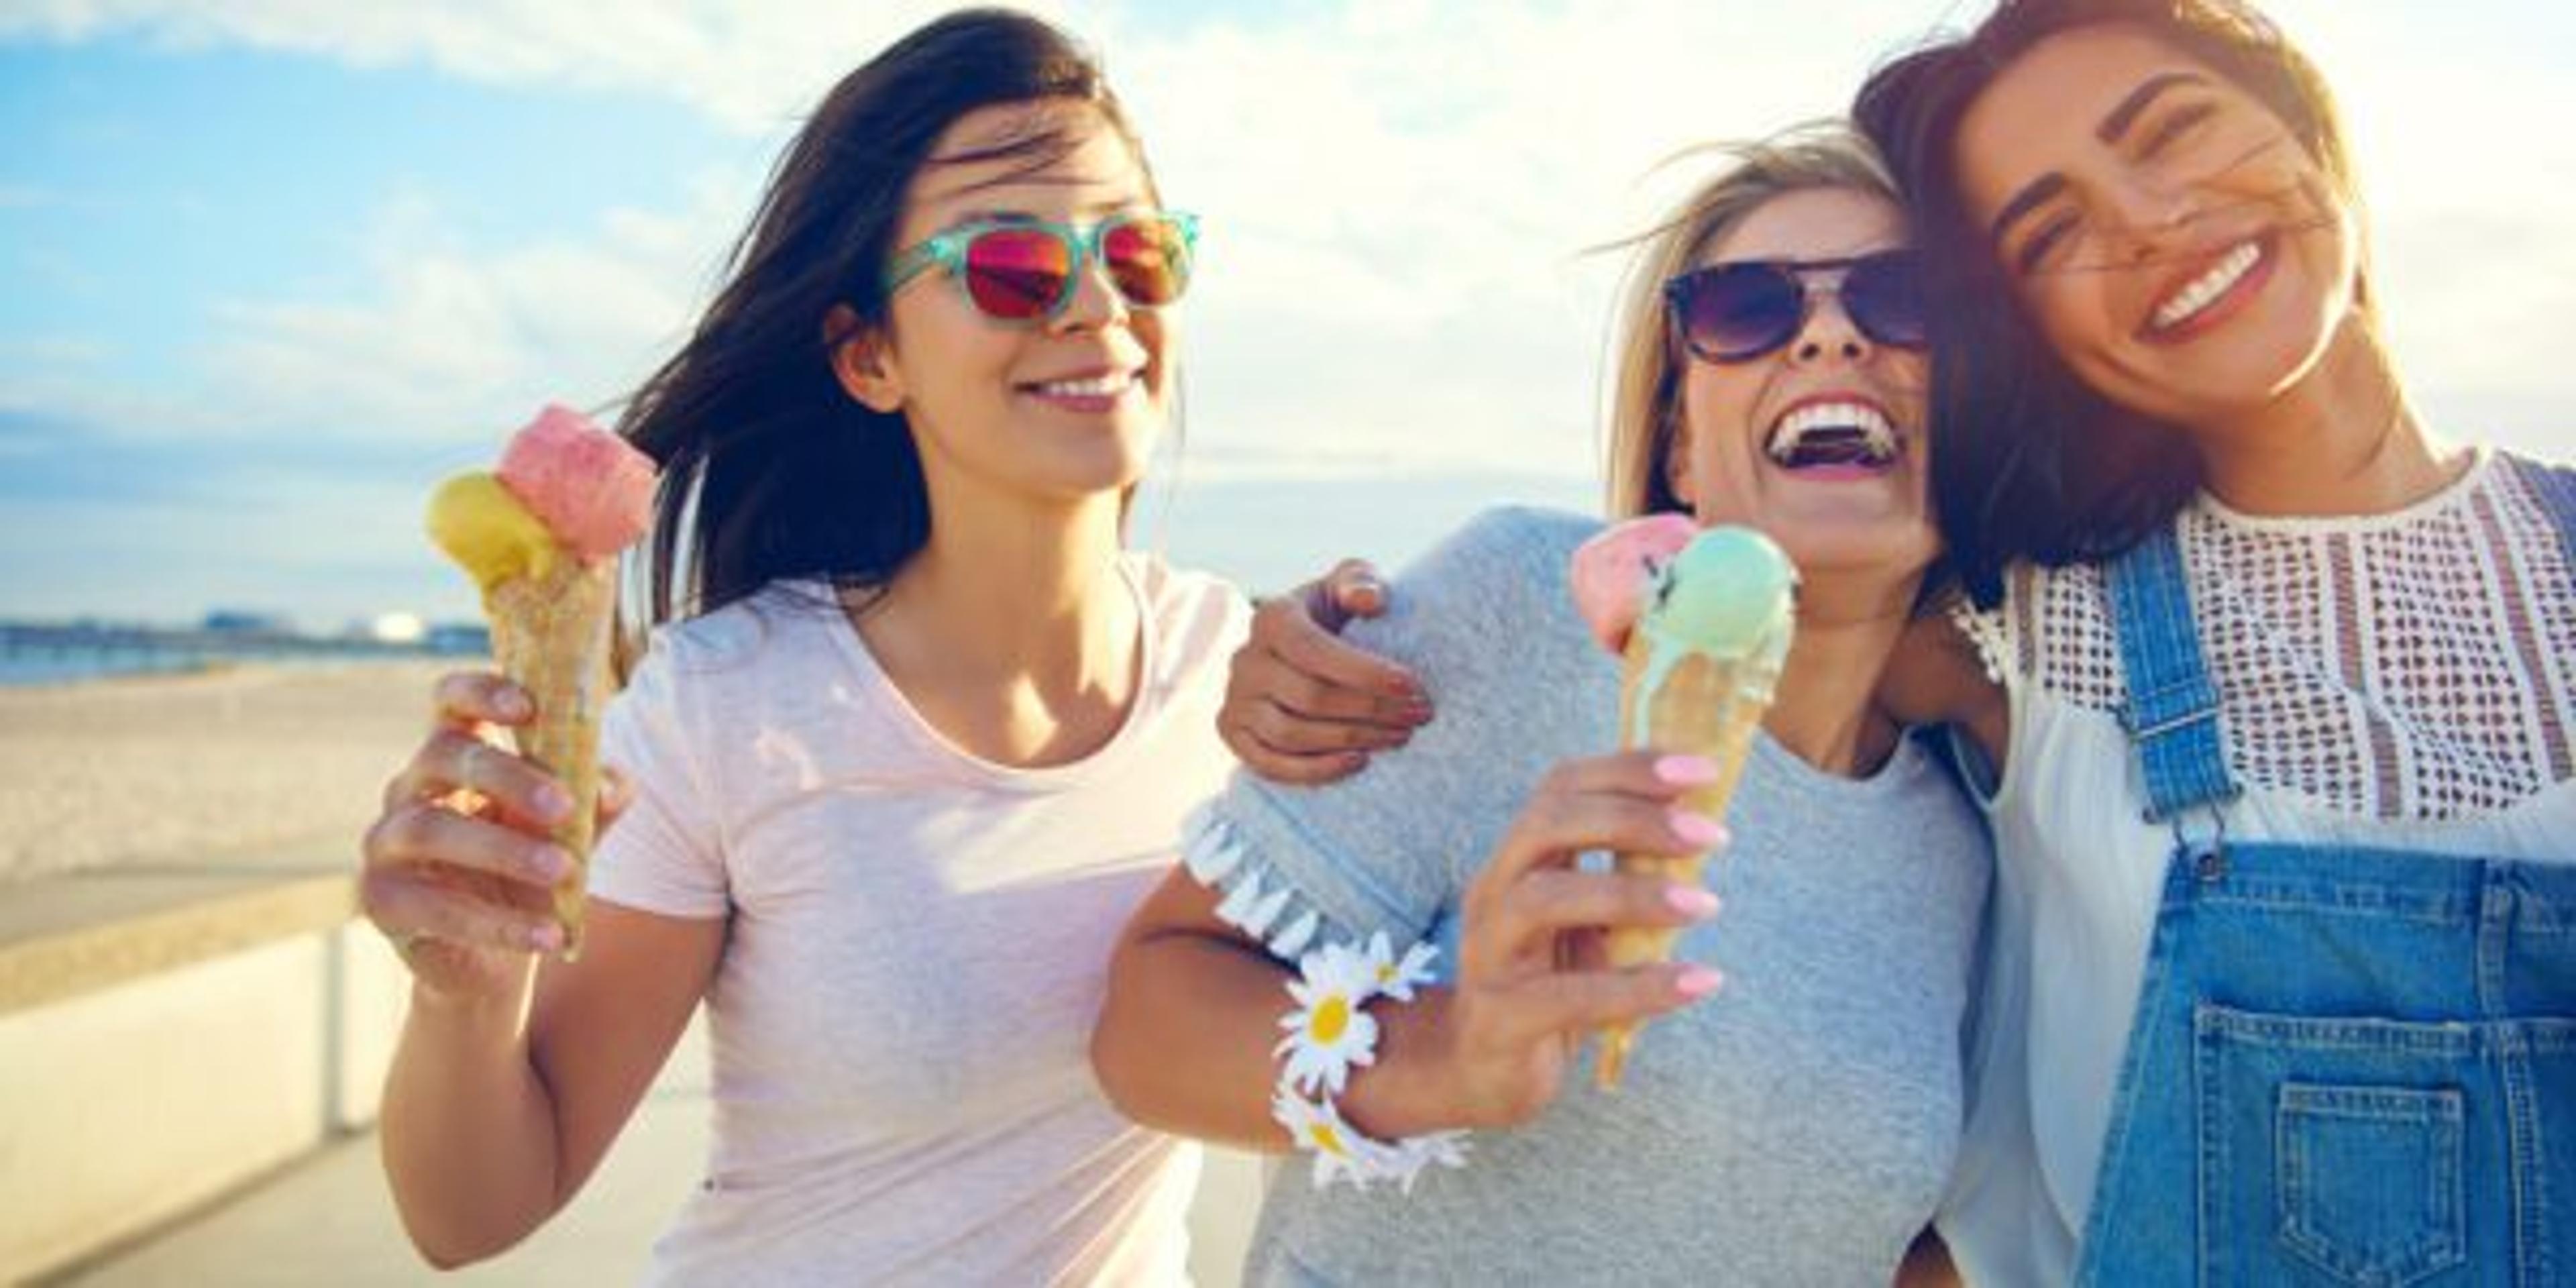 Laughing teenage girls enjoying ice cream cones